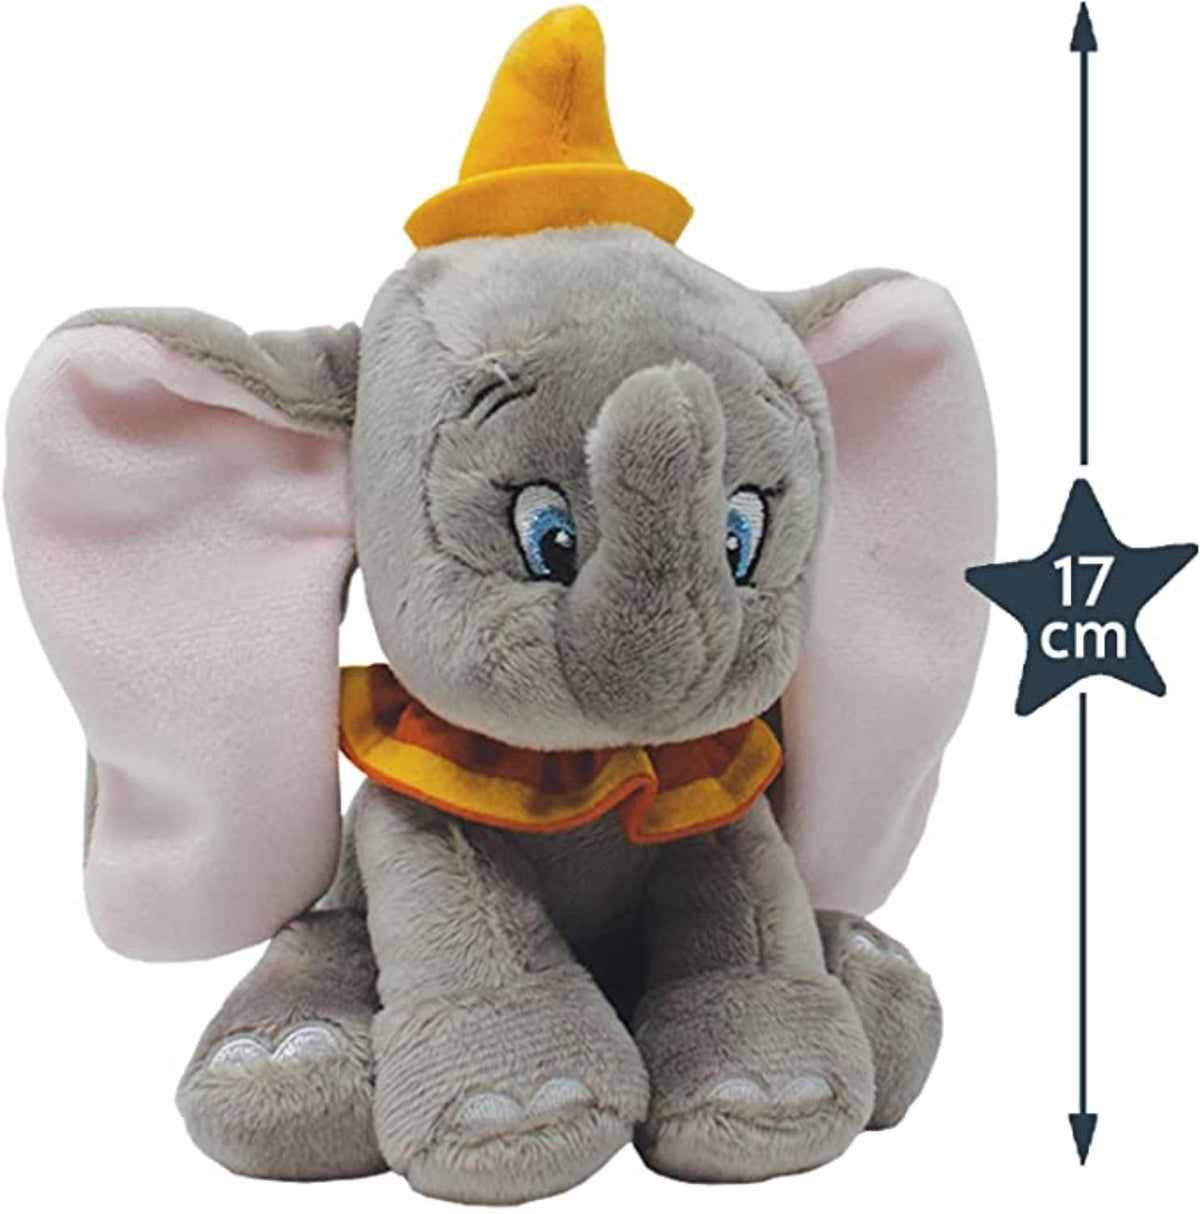 Disney Baby Dumbo Small